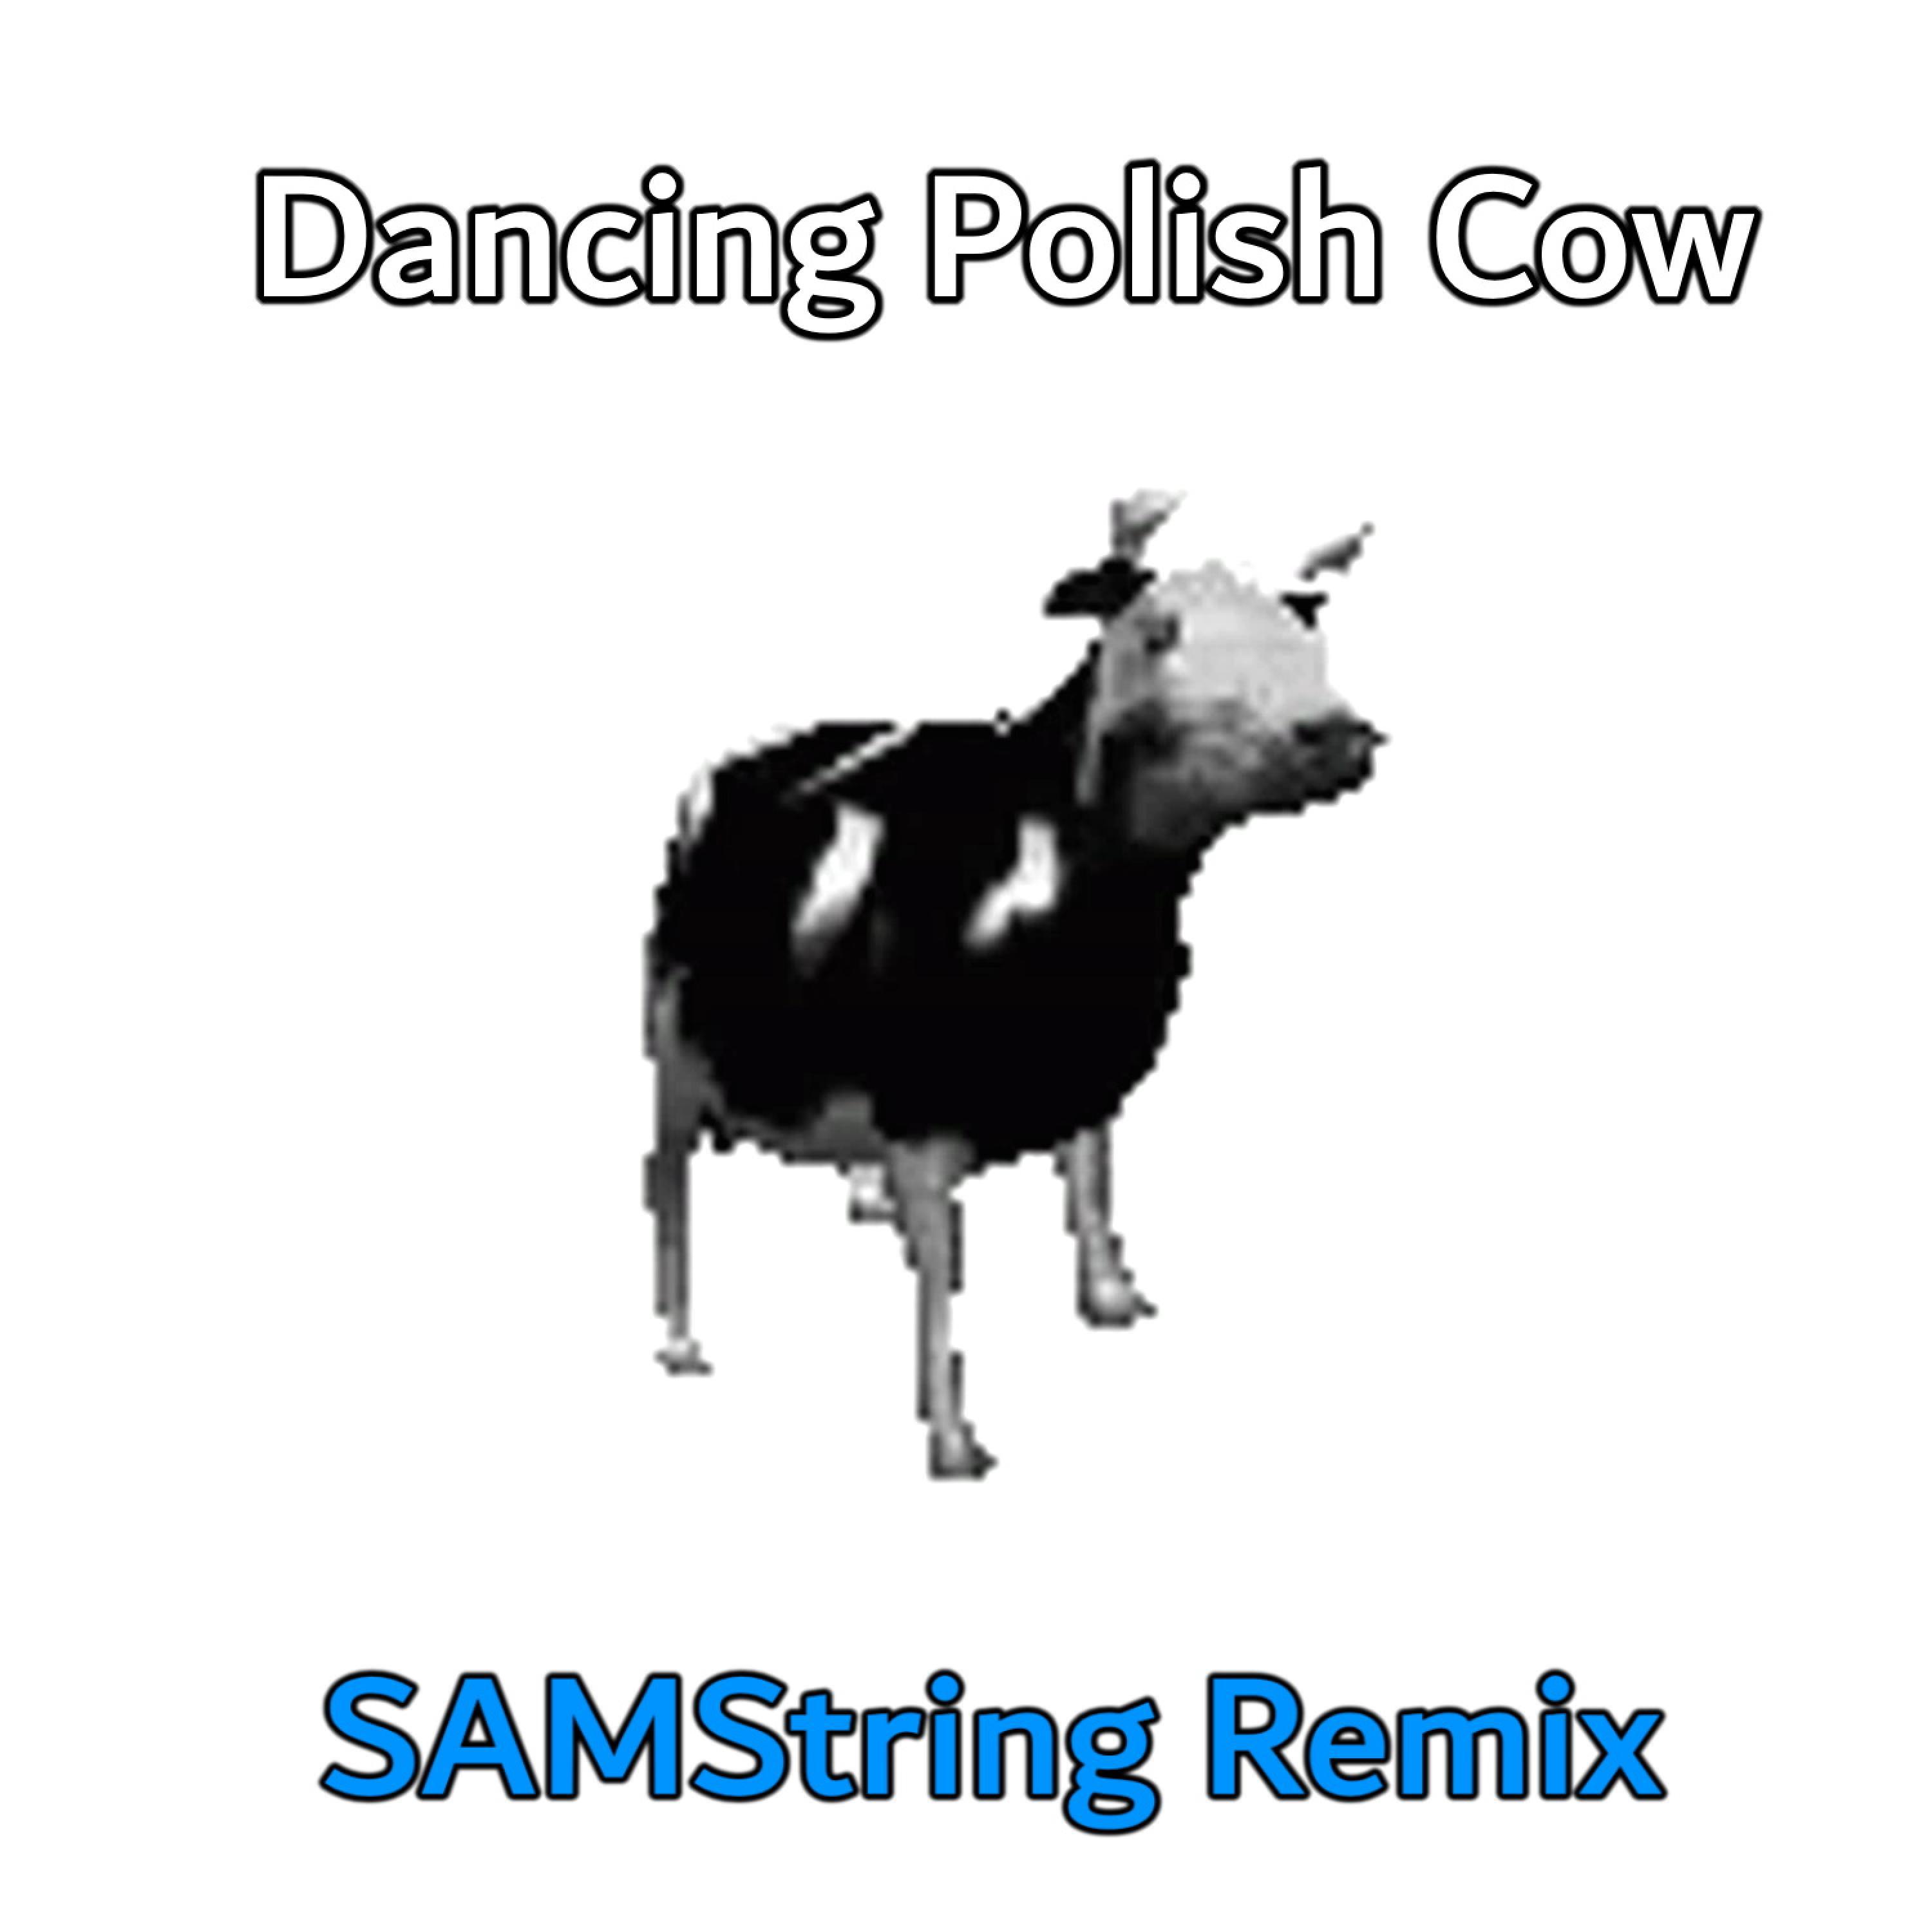 Polish cow текст. Корова танцует. Polish Cow Dance Song. Dancing Polish Cow текст.